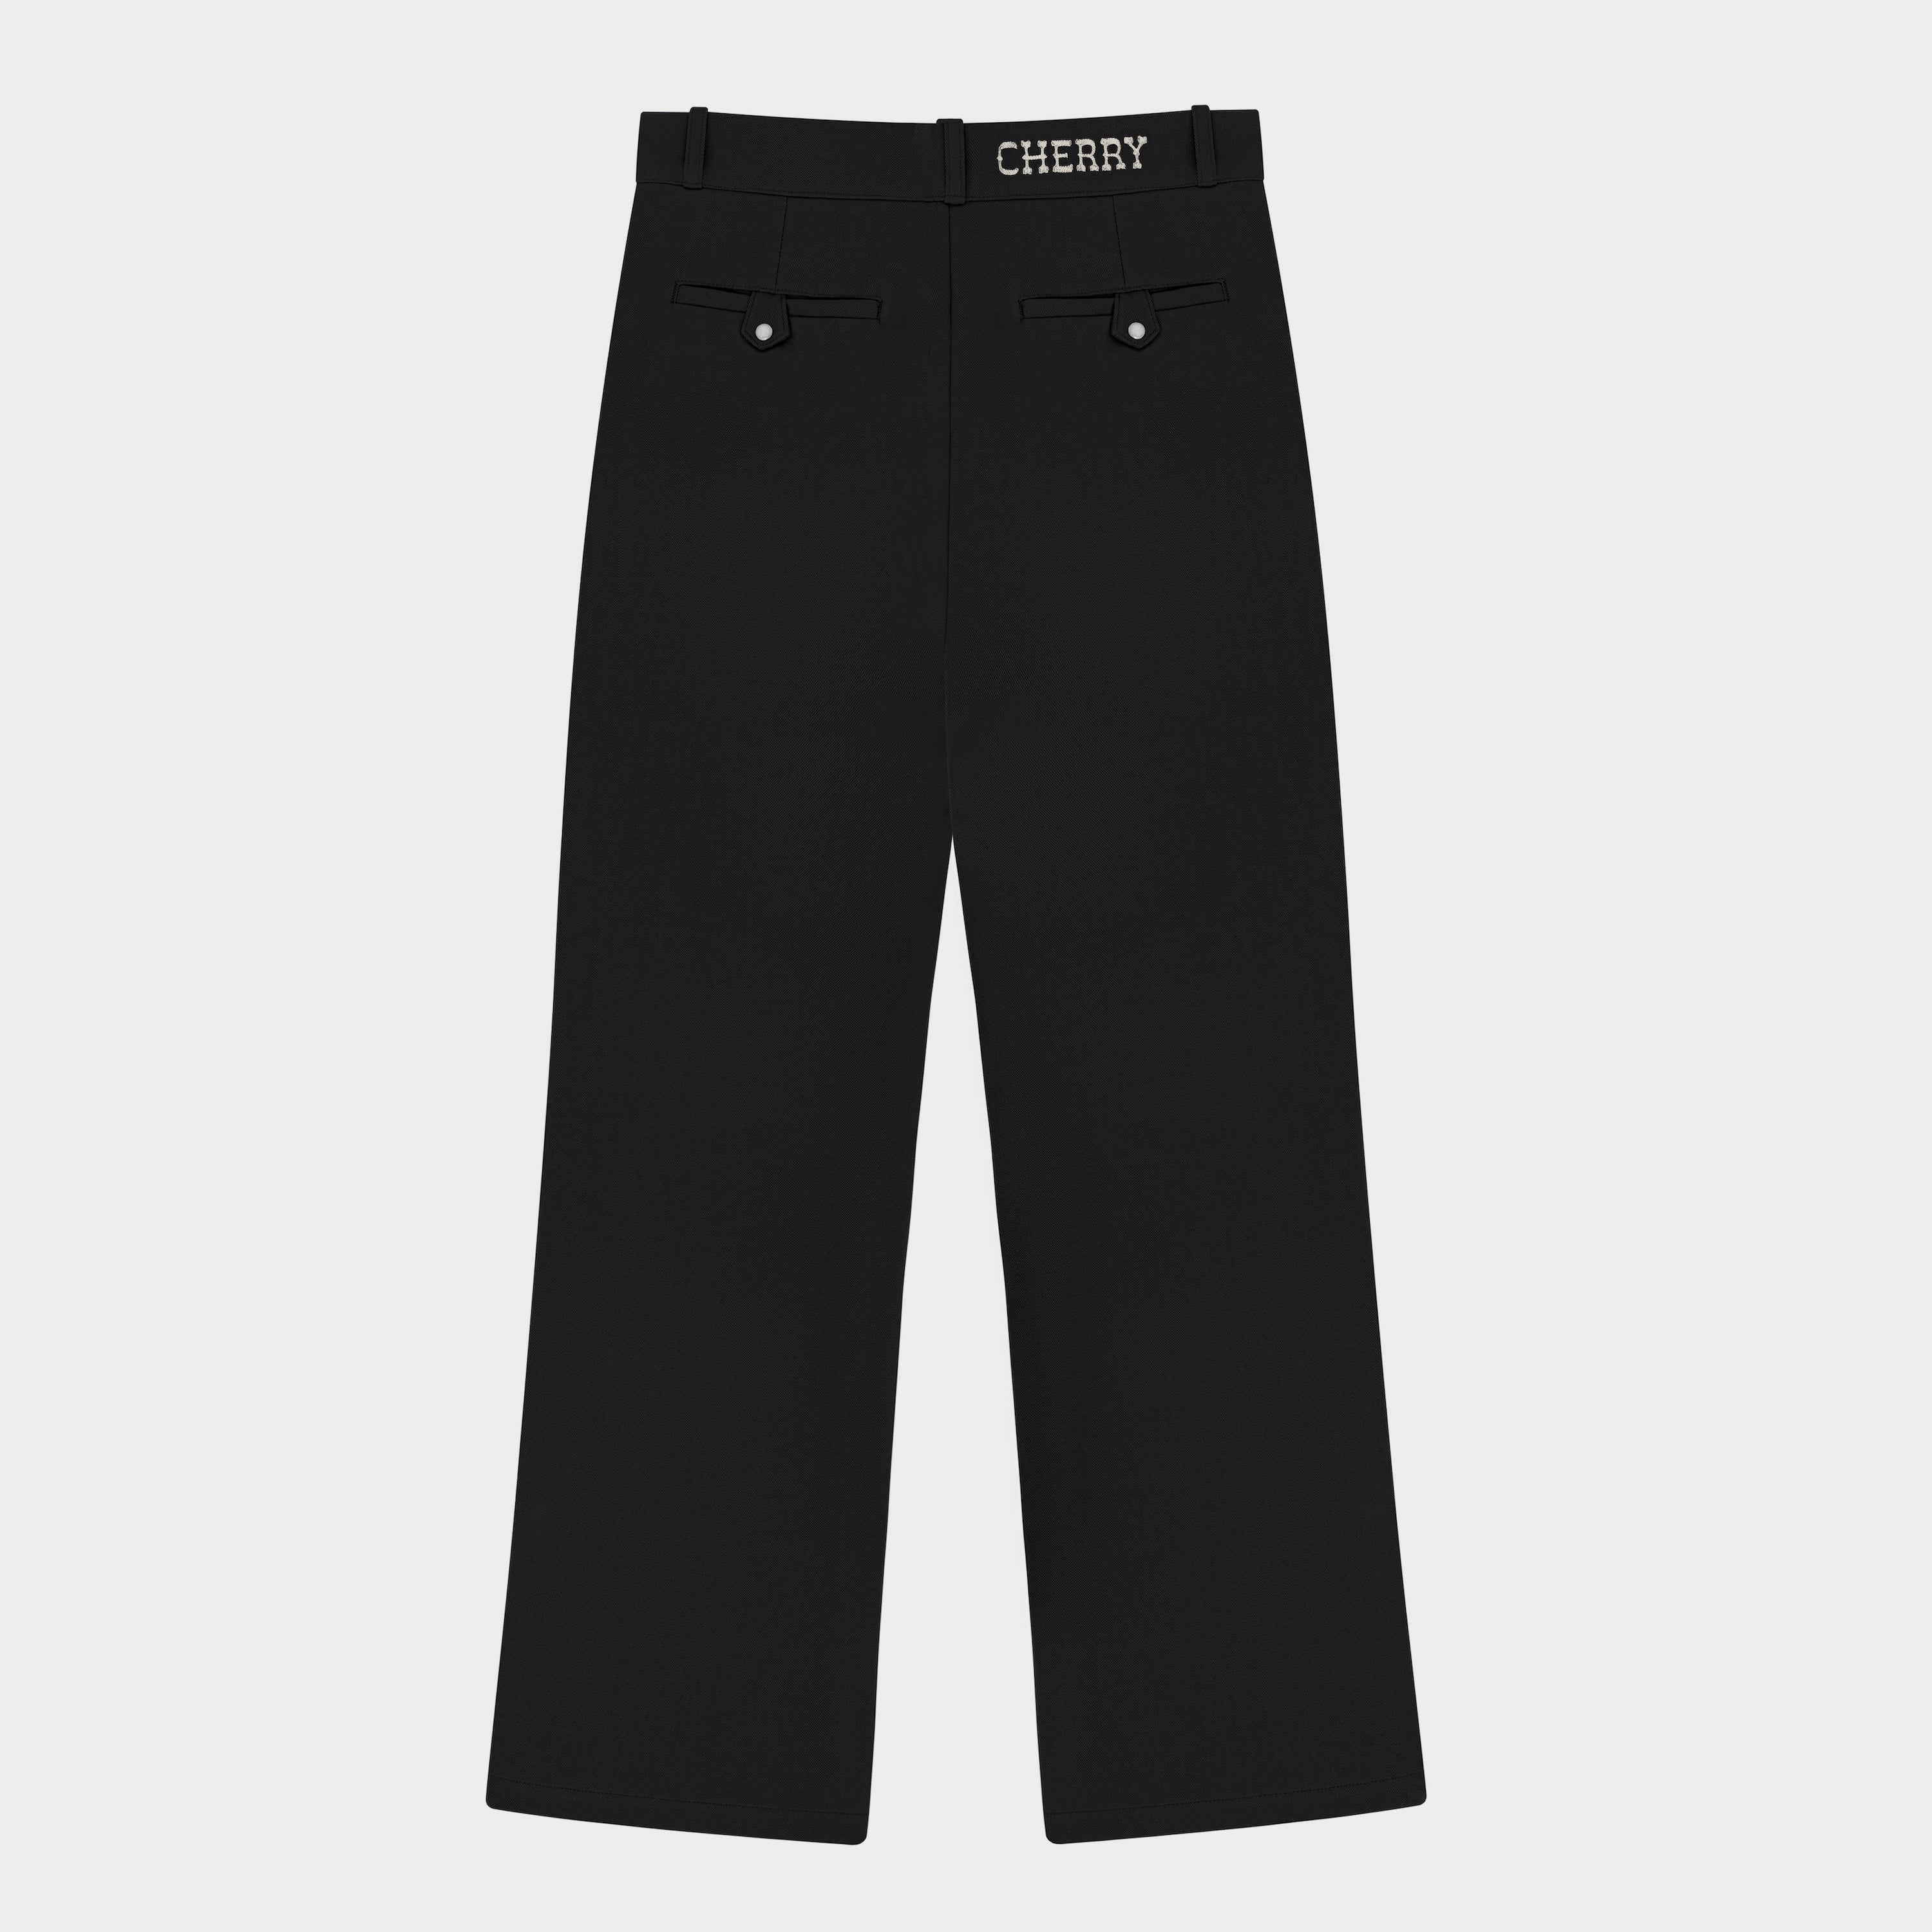 Western Chino Pants (Black)